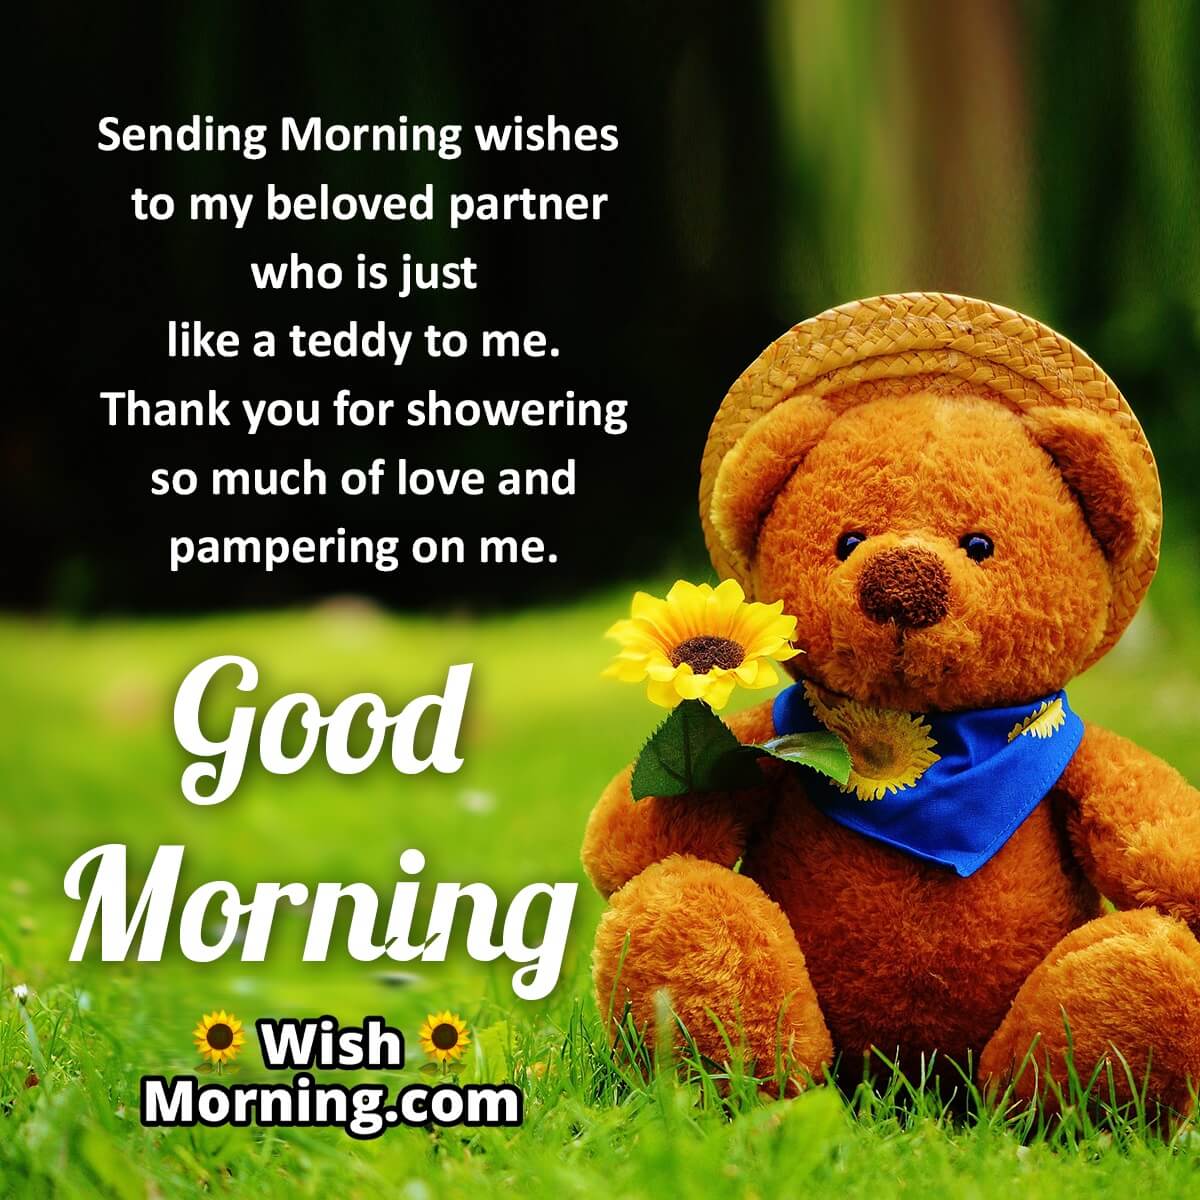 Good Morning Teddy Message For Partner